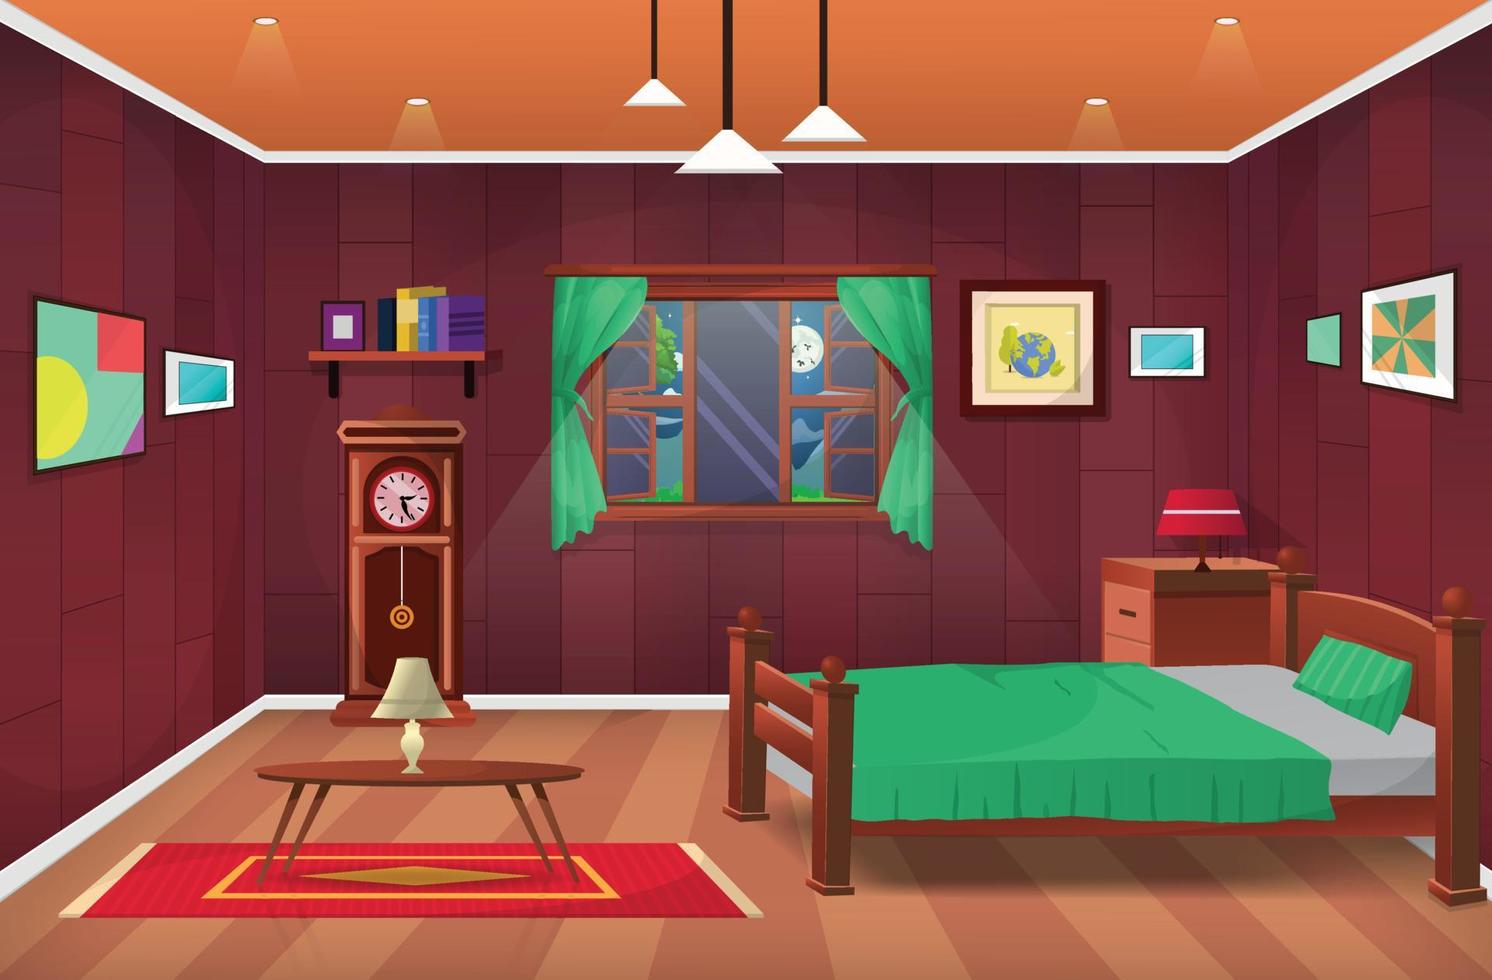 Room interior, bedroom, cartoon living room, kids bedroom with furniture. Teenage room with bed. vector